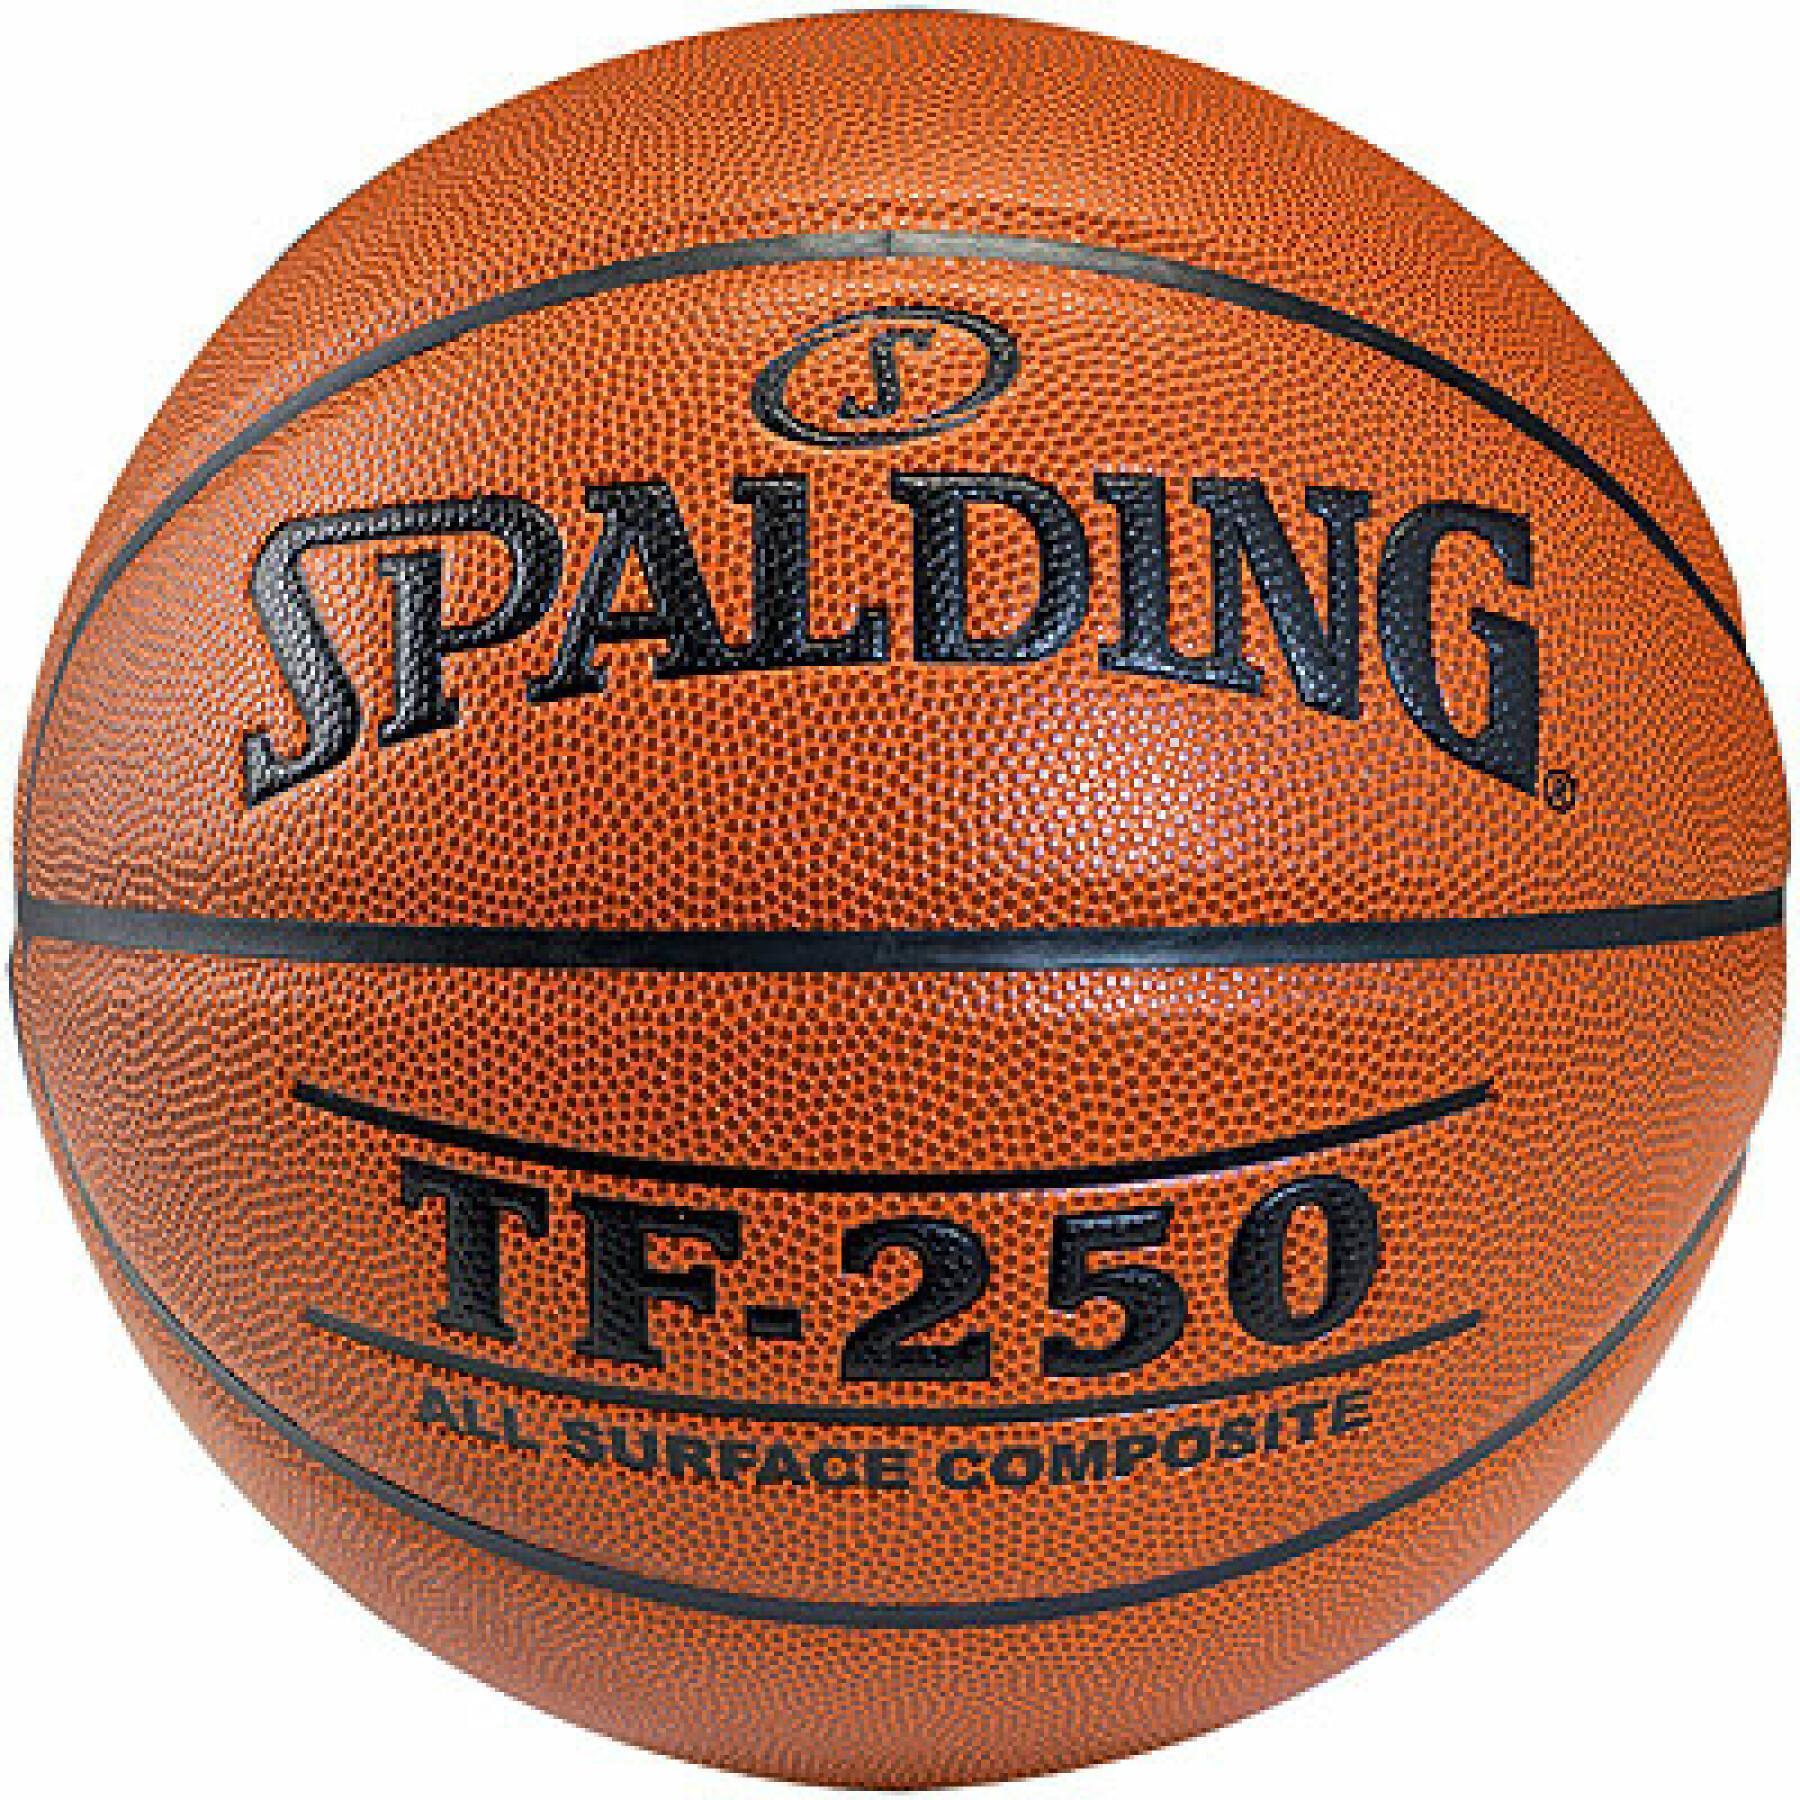 Ballon de basket Spalding TF250 indoor/outdoor